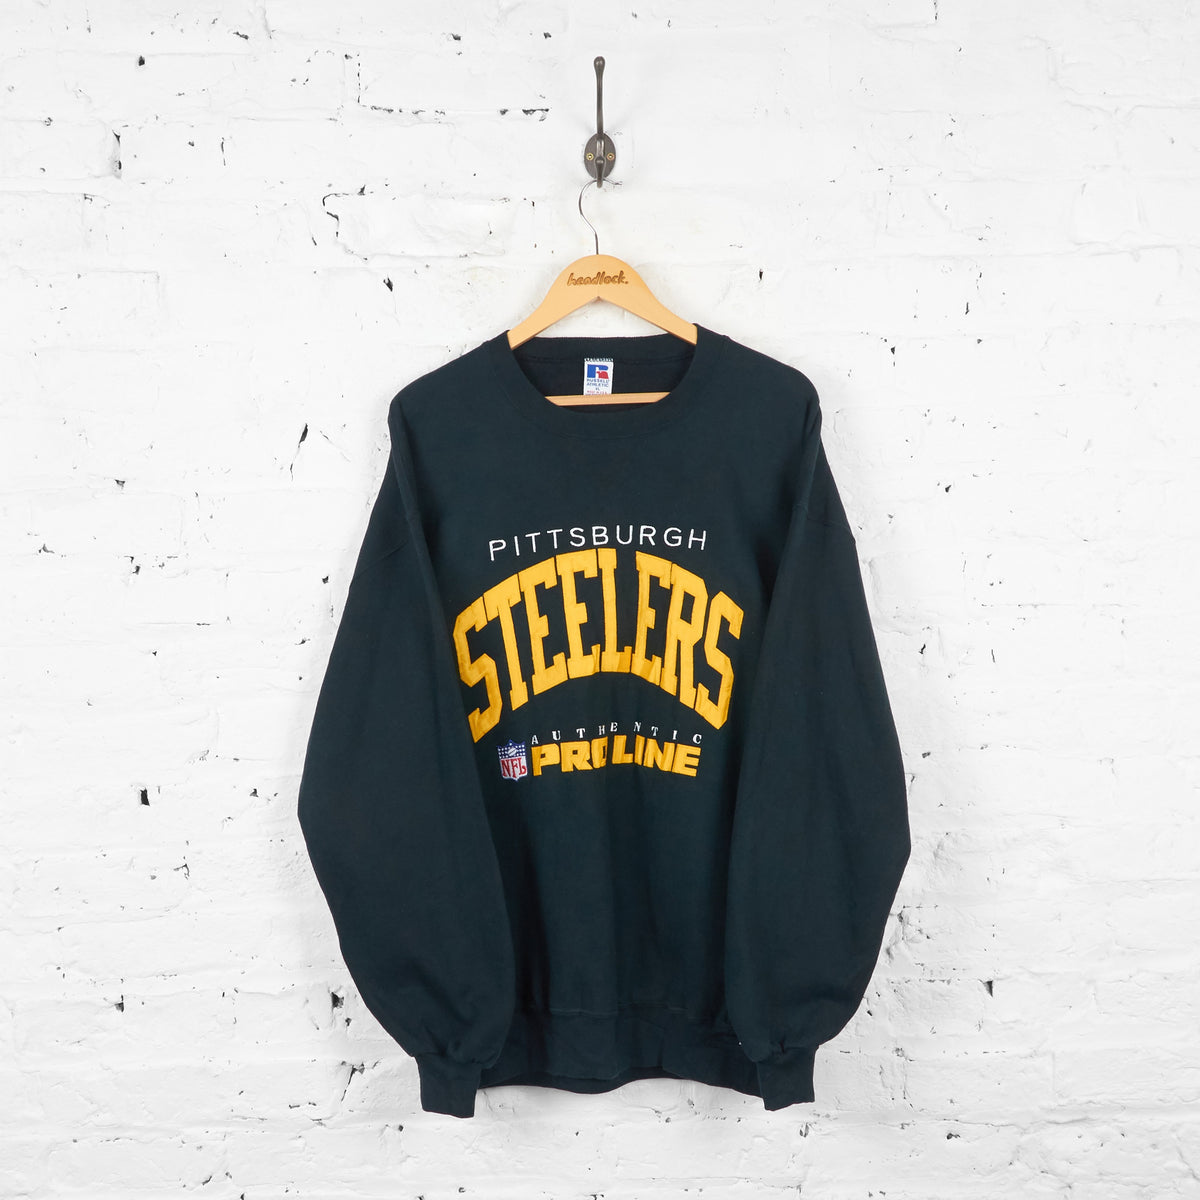 steelers embroidered sweatshirt